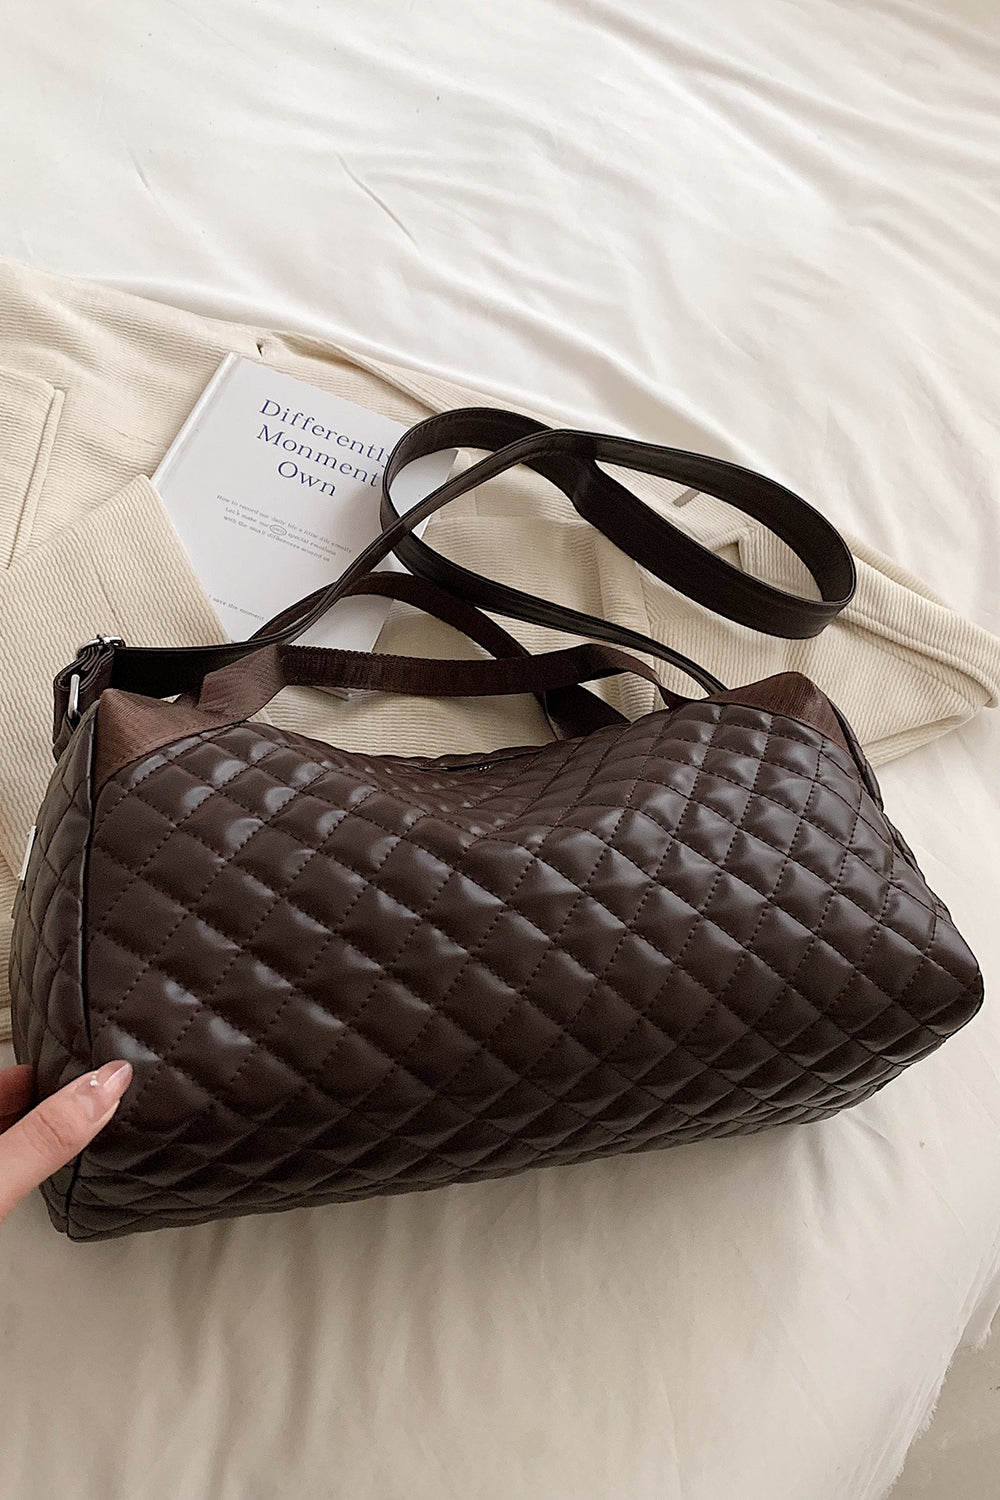 Embossing Chocolate Brown Travel and Baby bag Large PU Leather Handbag